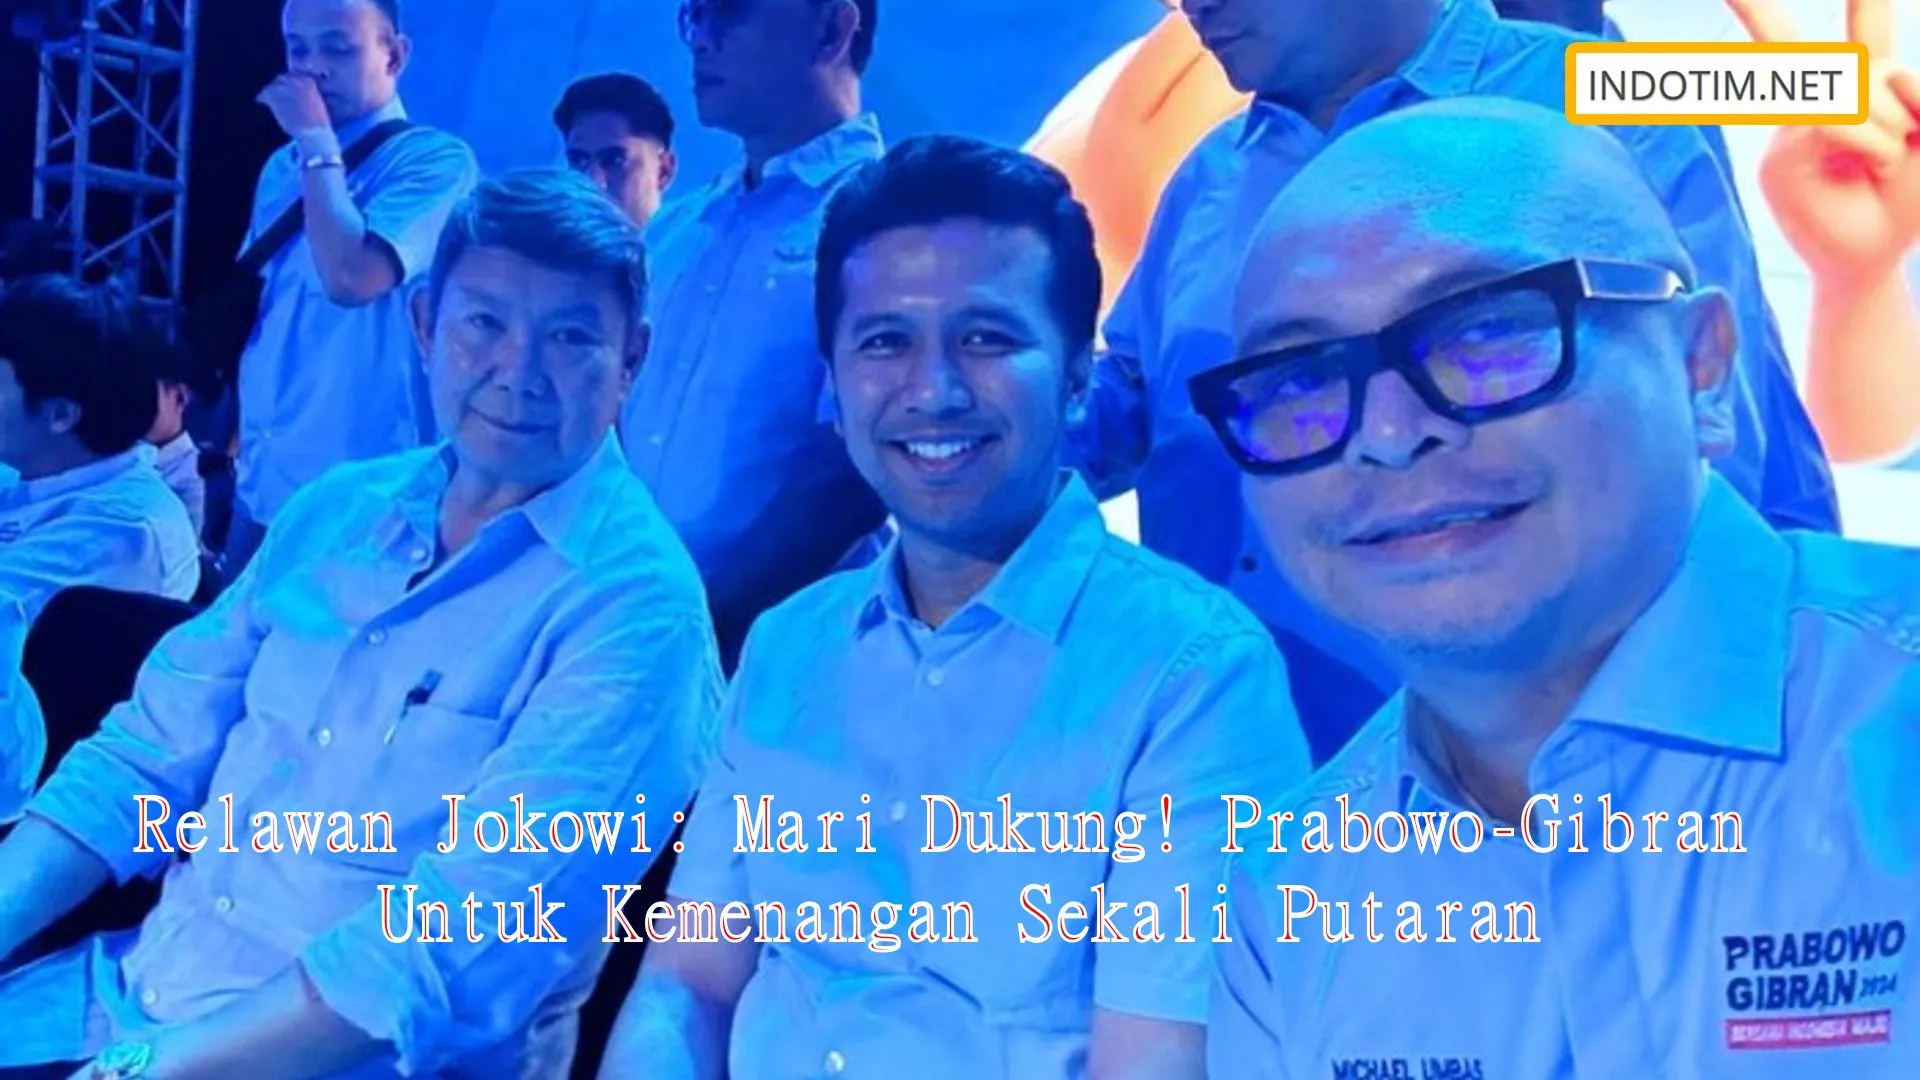 Relawan Jokowi: Mari Dukung! Prabowo-Gibran Untuk Kemenangan Sekali Putaran